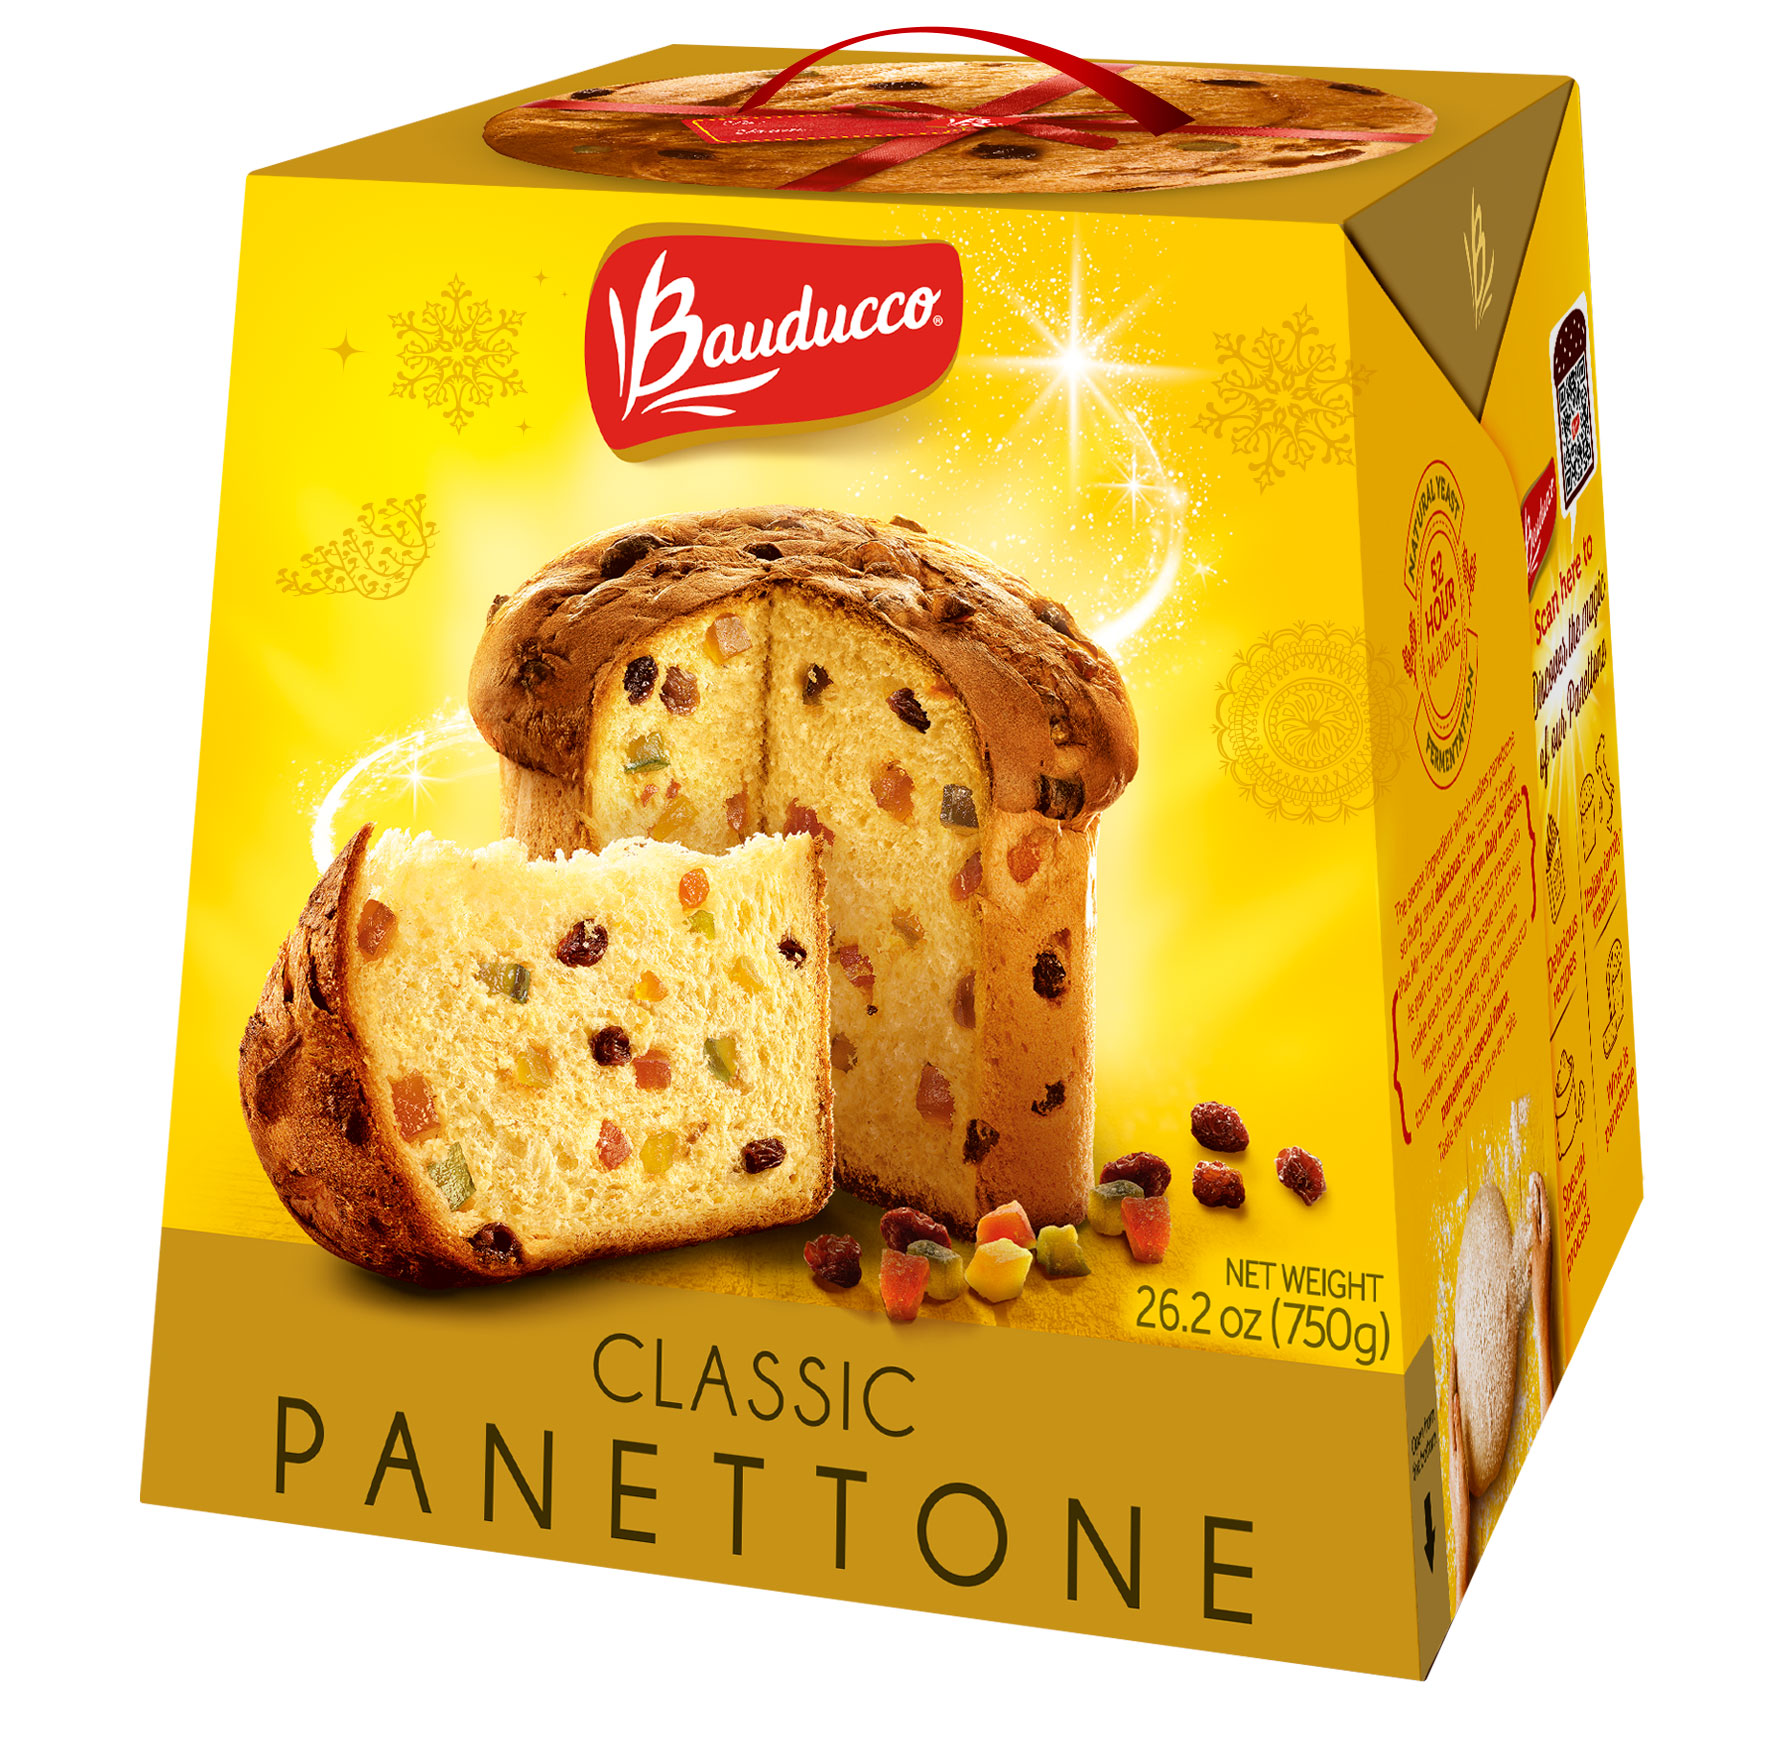 Bauducco Panettone Classic, Moist & Fresh, Traditional Italian Recipe, Holiday Cake, 26.2oz - image 1 of 9